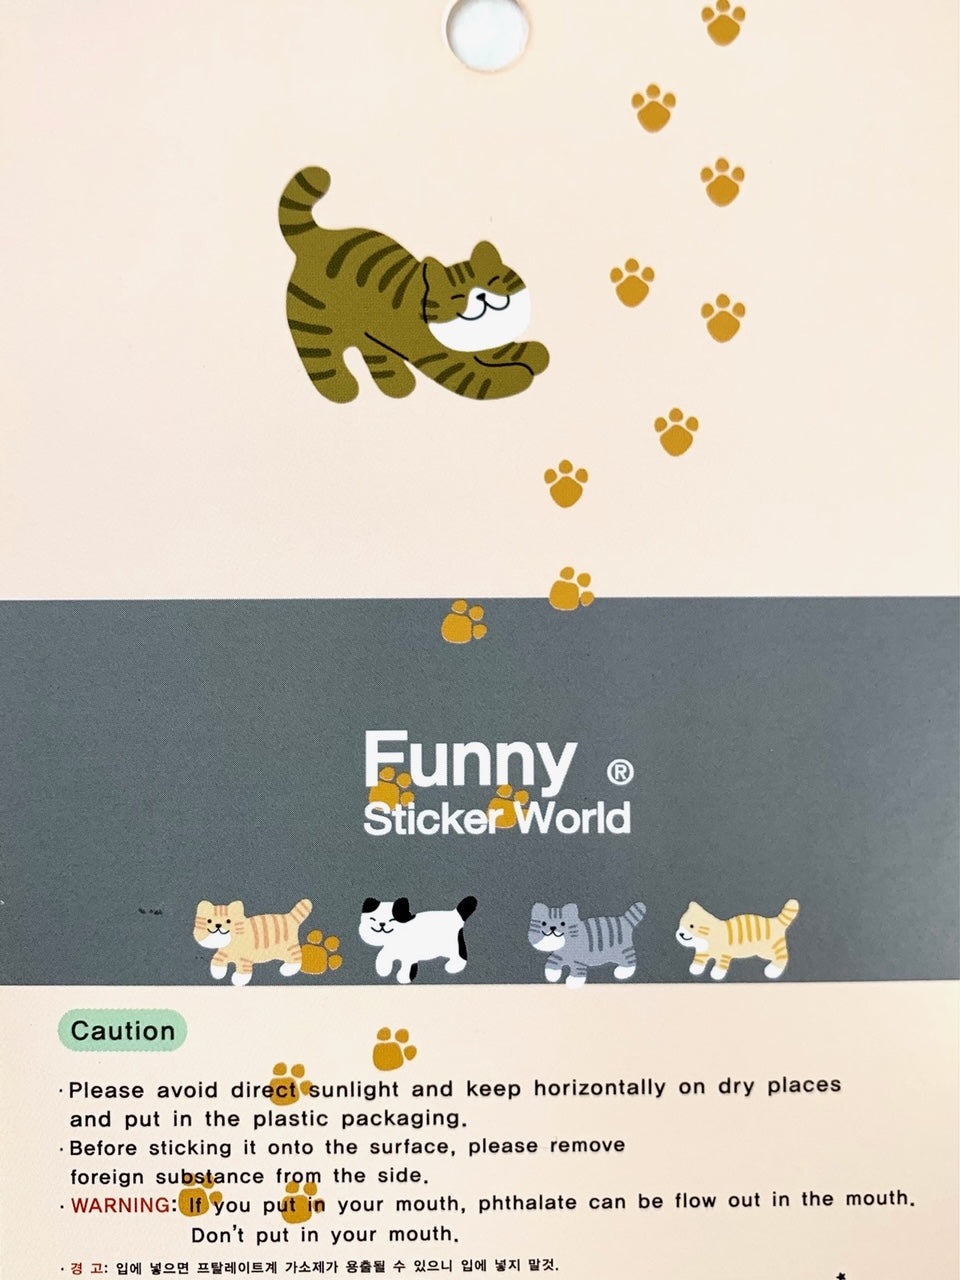 Cat Puffy Stickers 